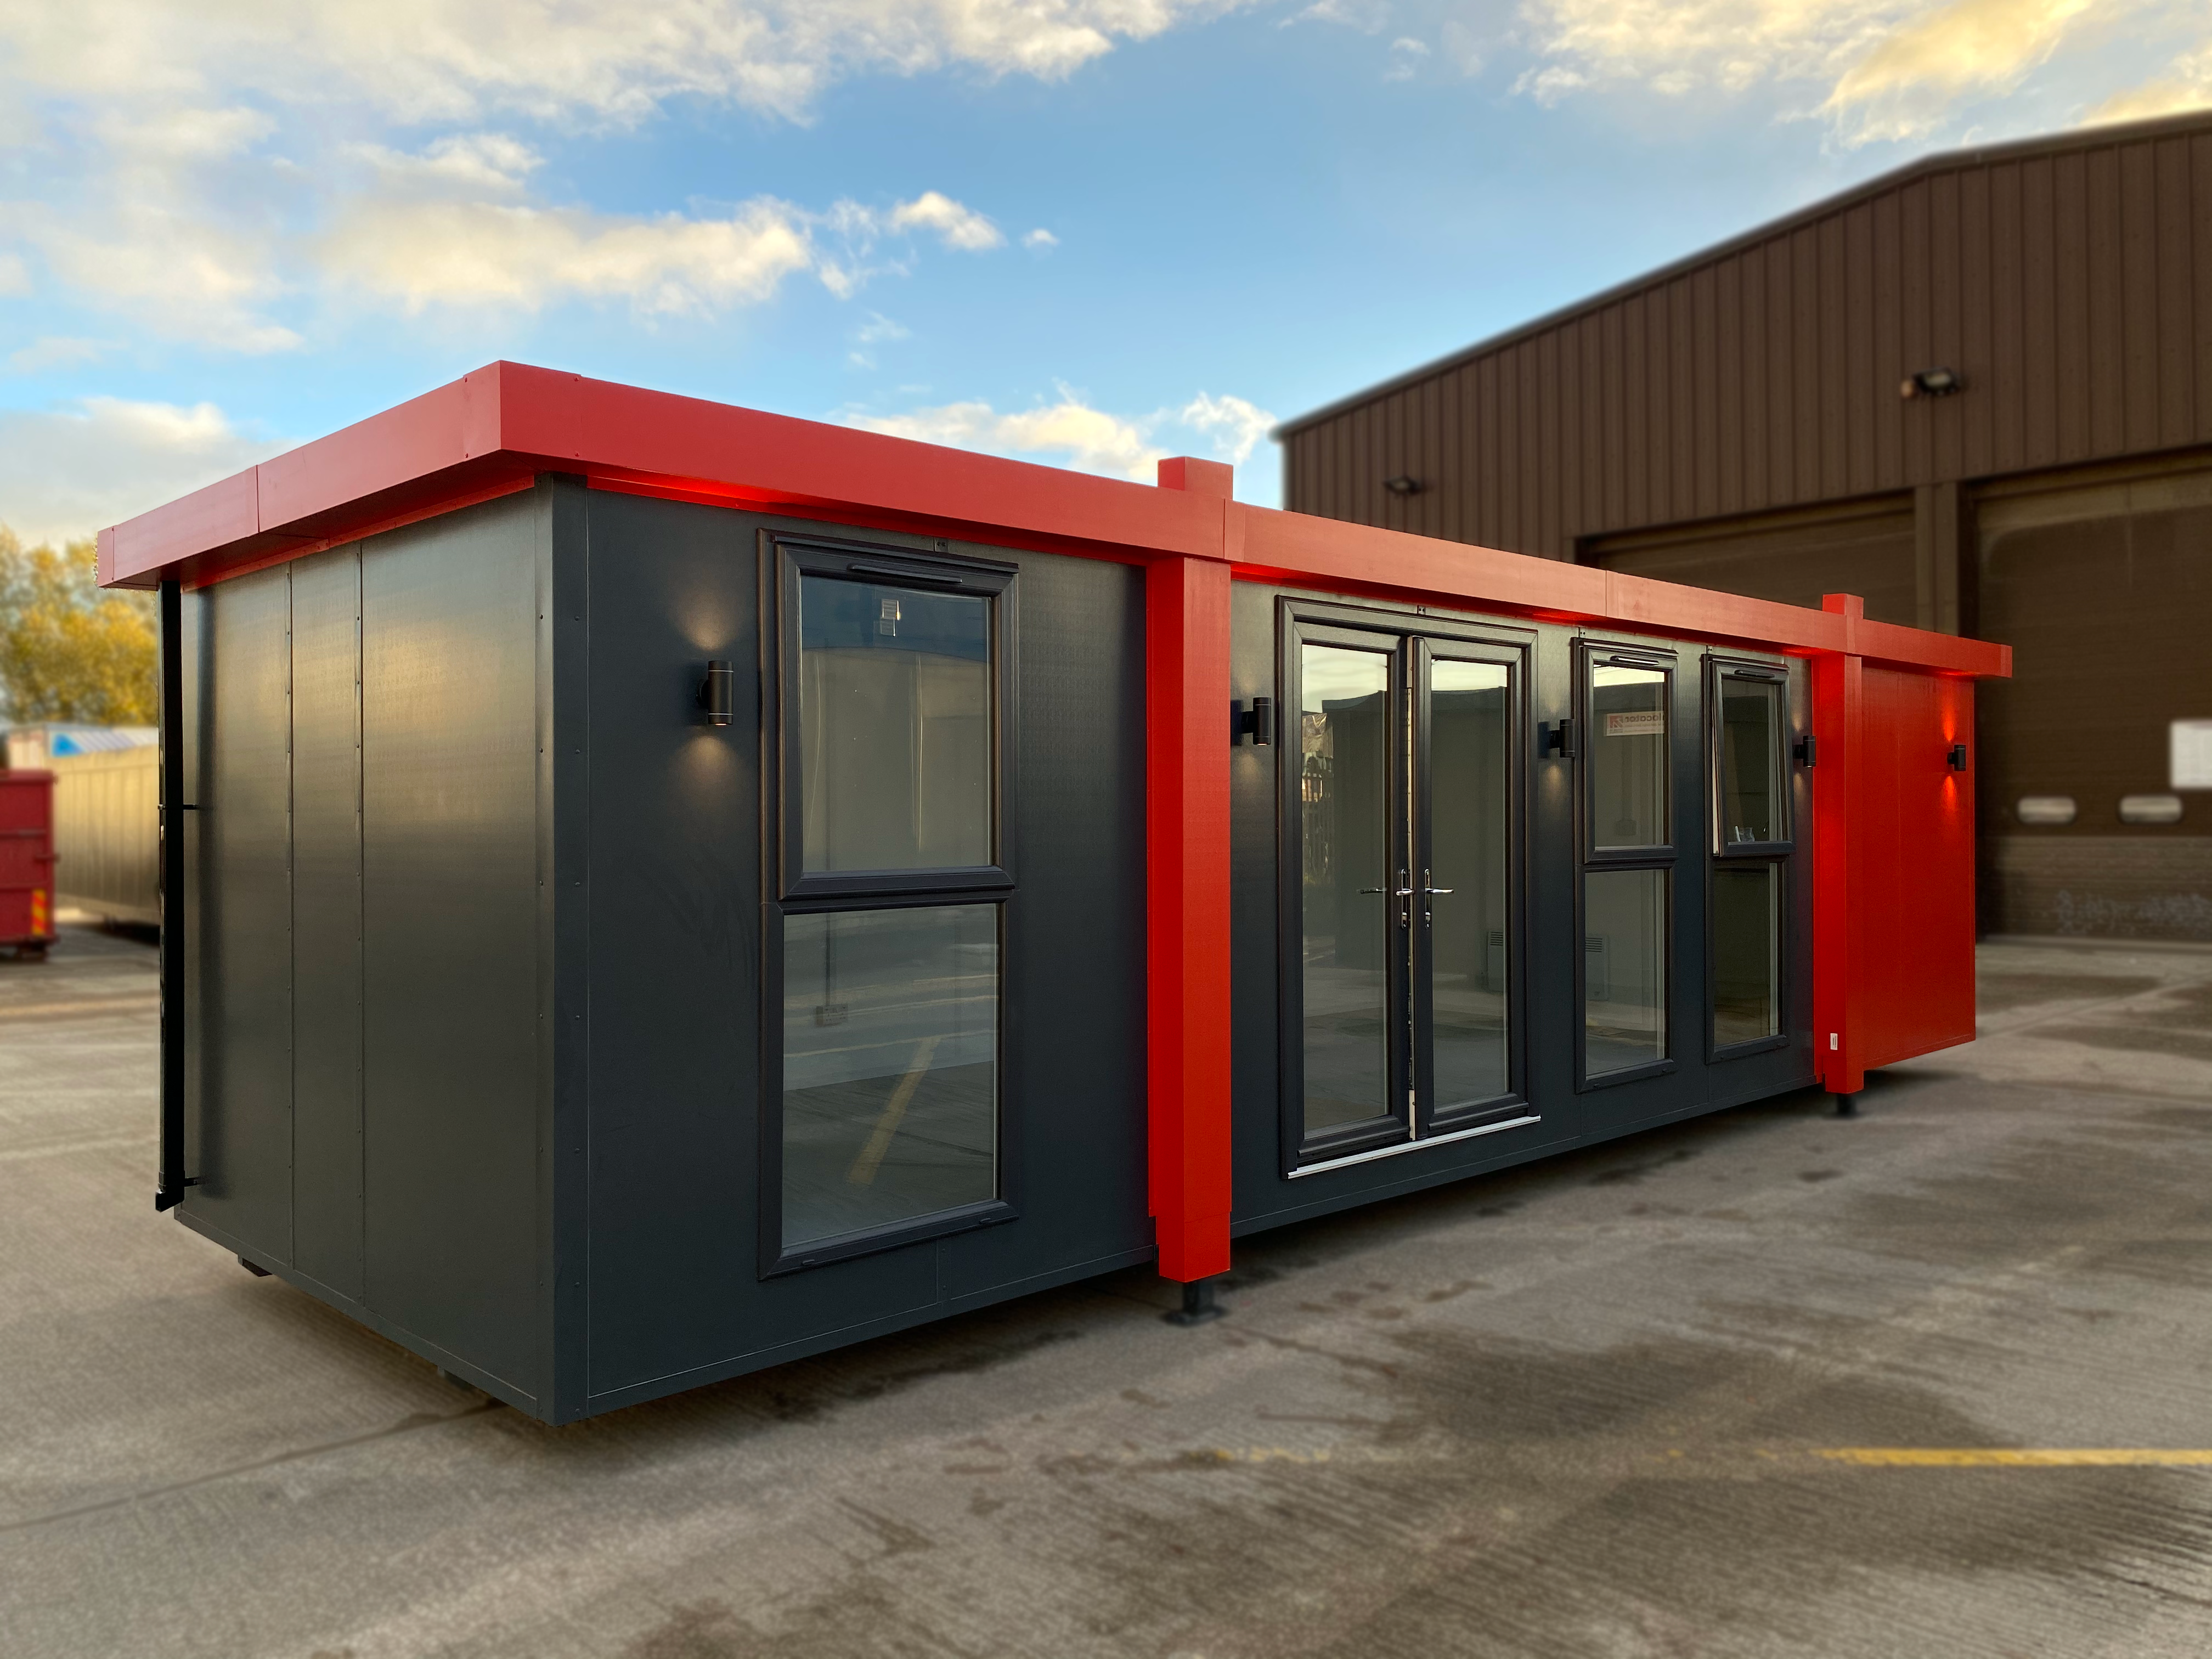 DfE Funding For Portable Cabins Amid School Concrete Crisis